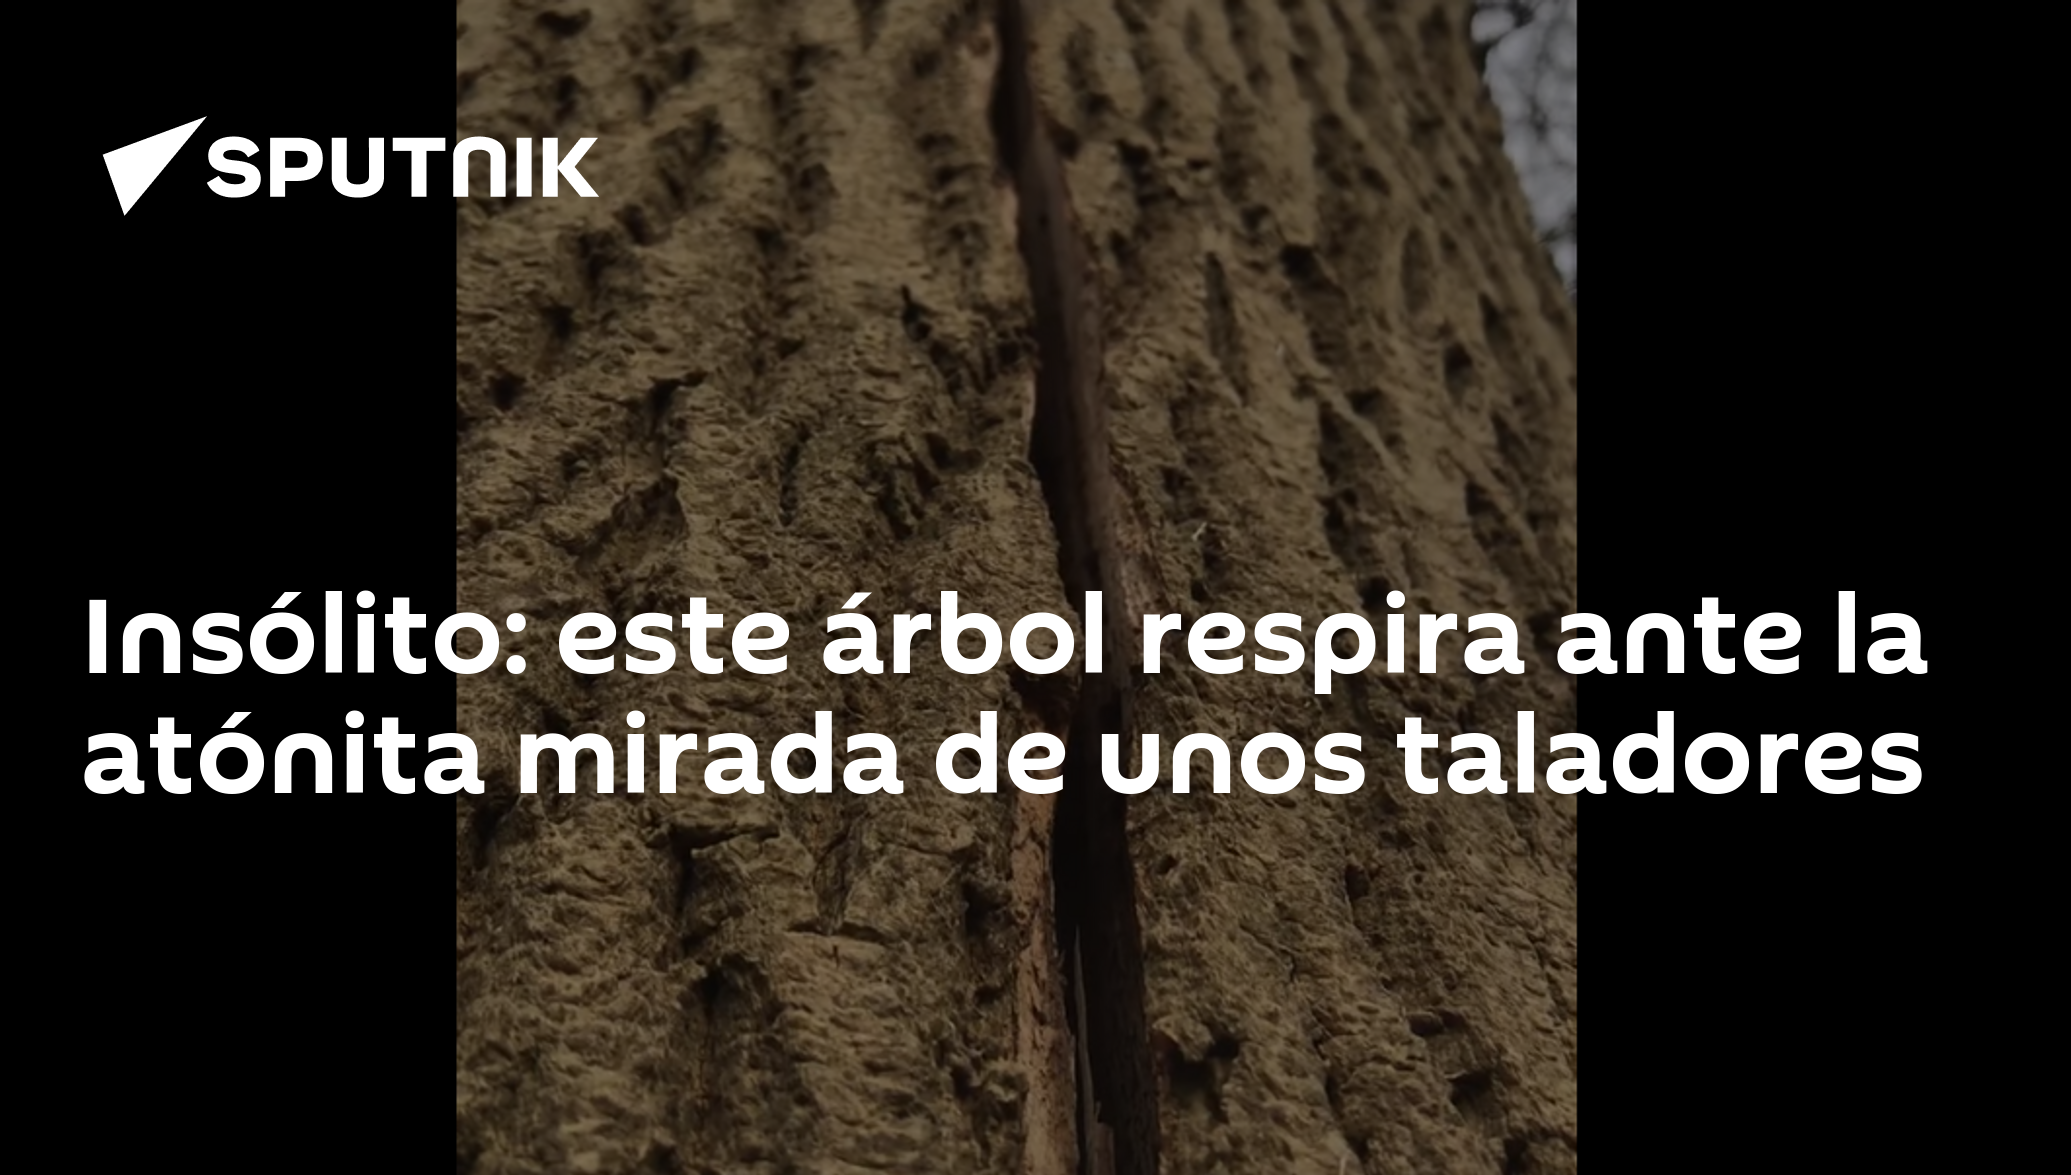 Insólito: este árbol respira ante la atónita mirada de unos taladores -  06.03.2020, Sputnik Mundo